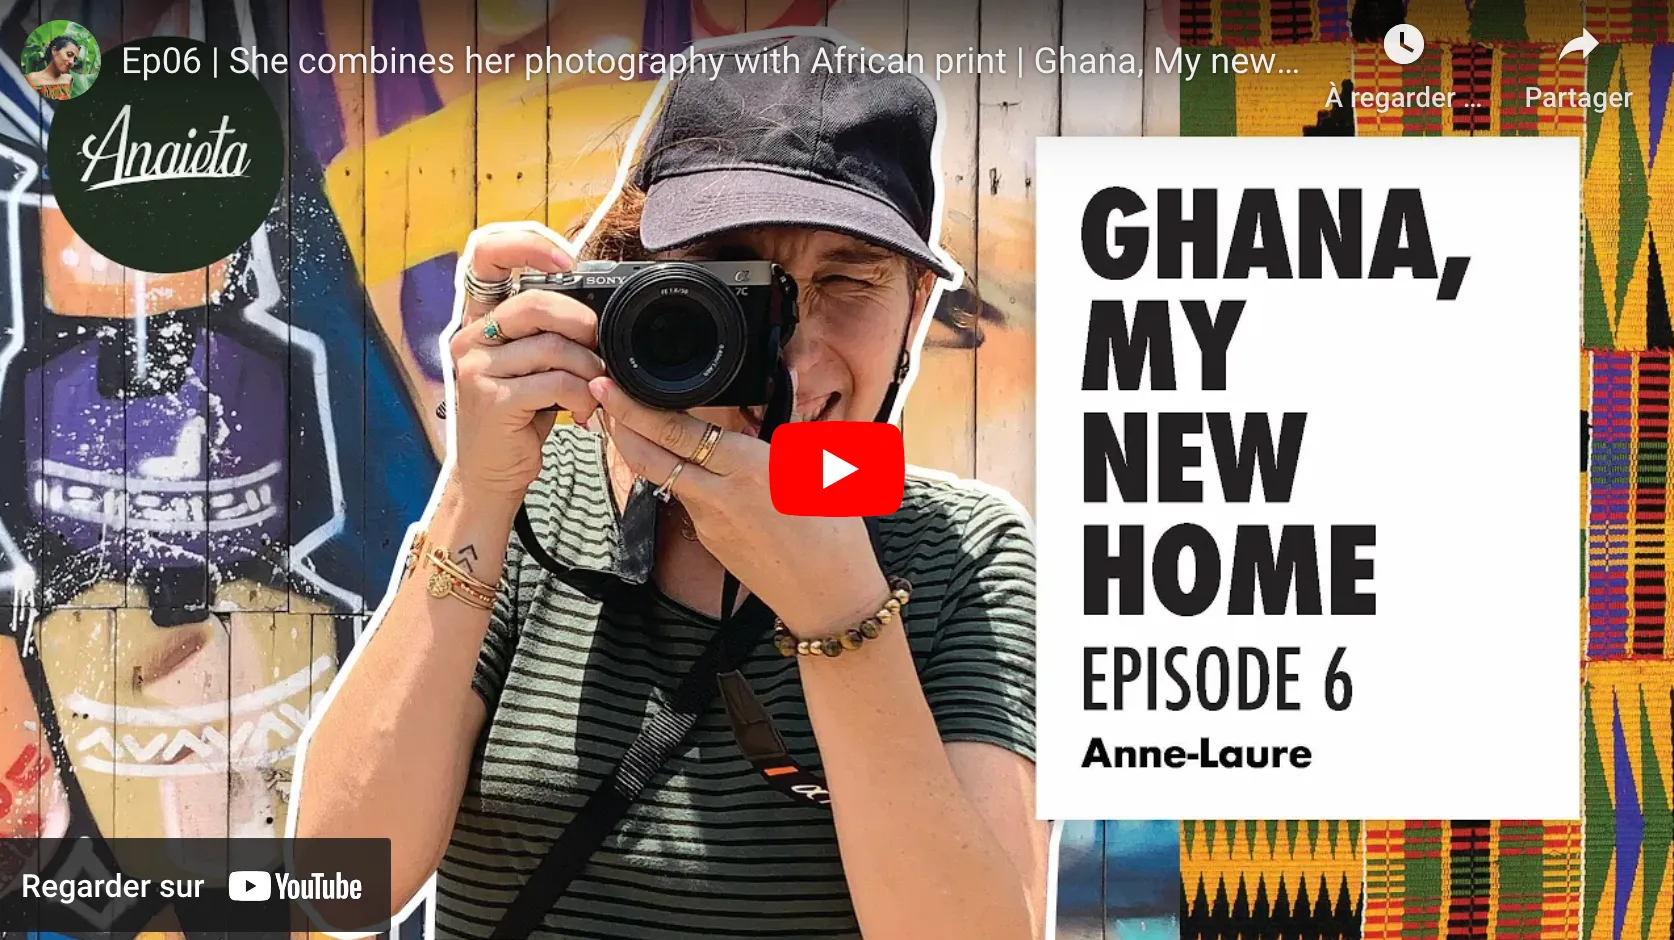 Ghana, my new home, YouTube video